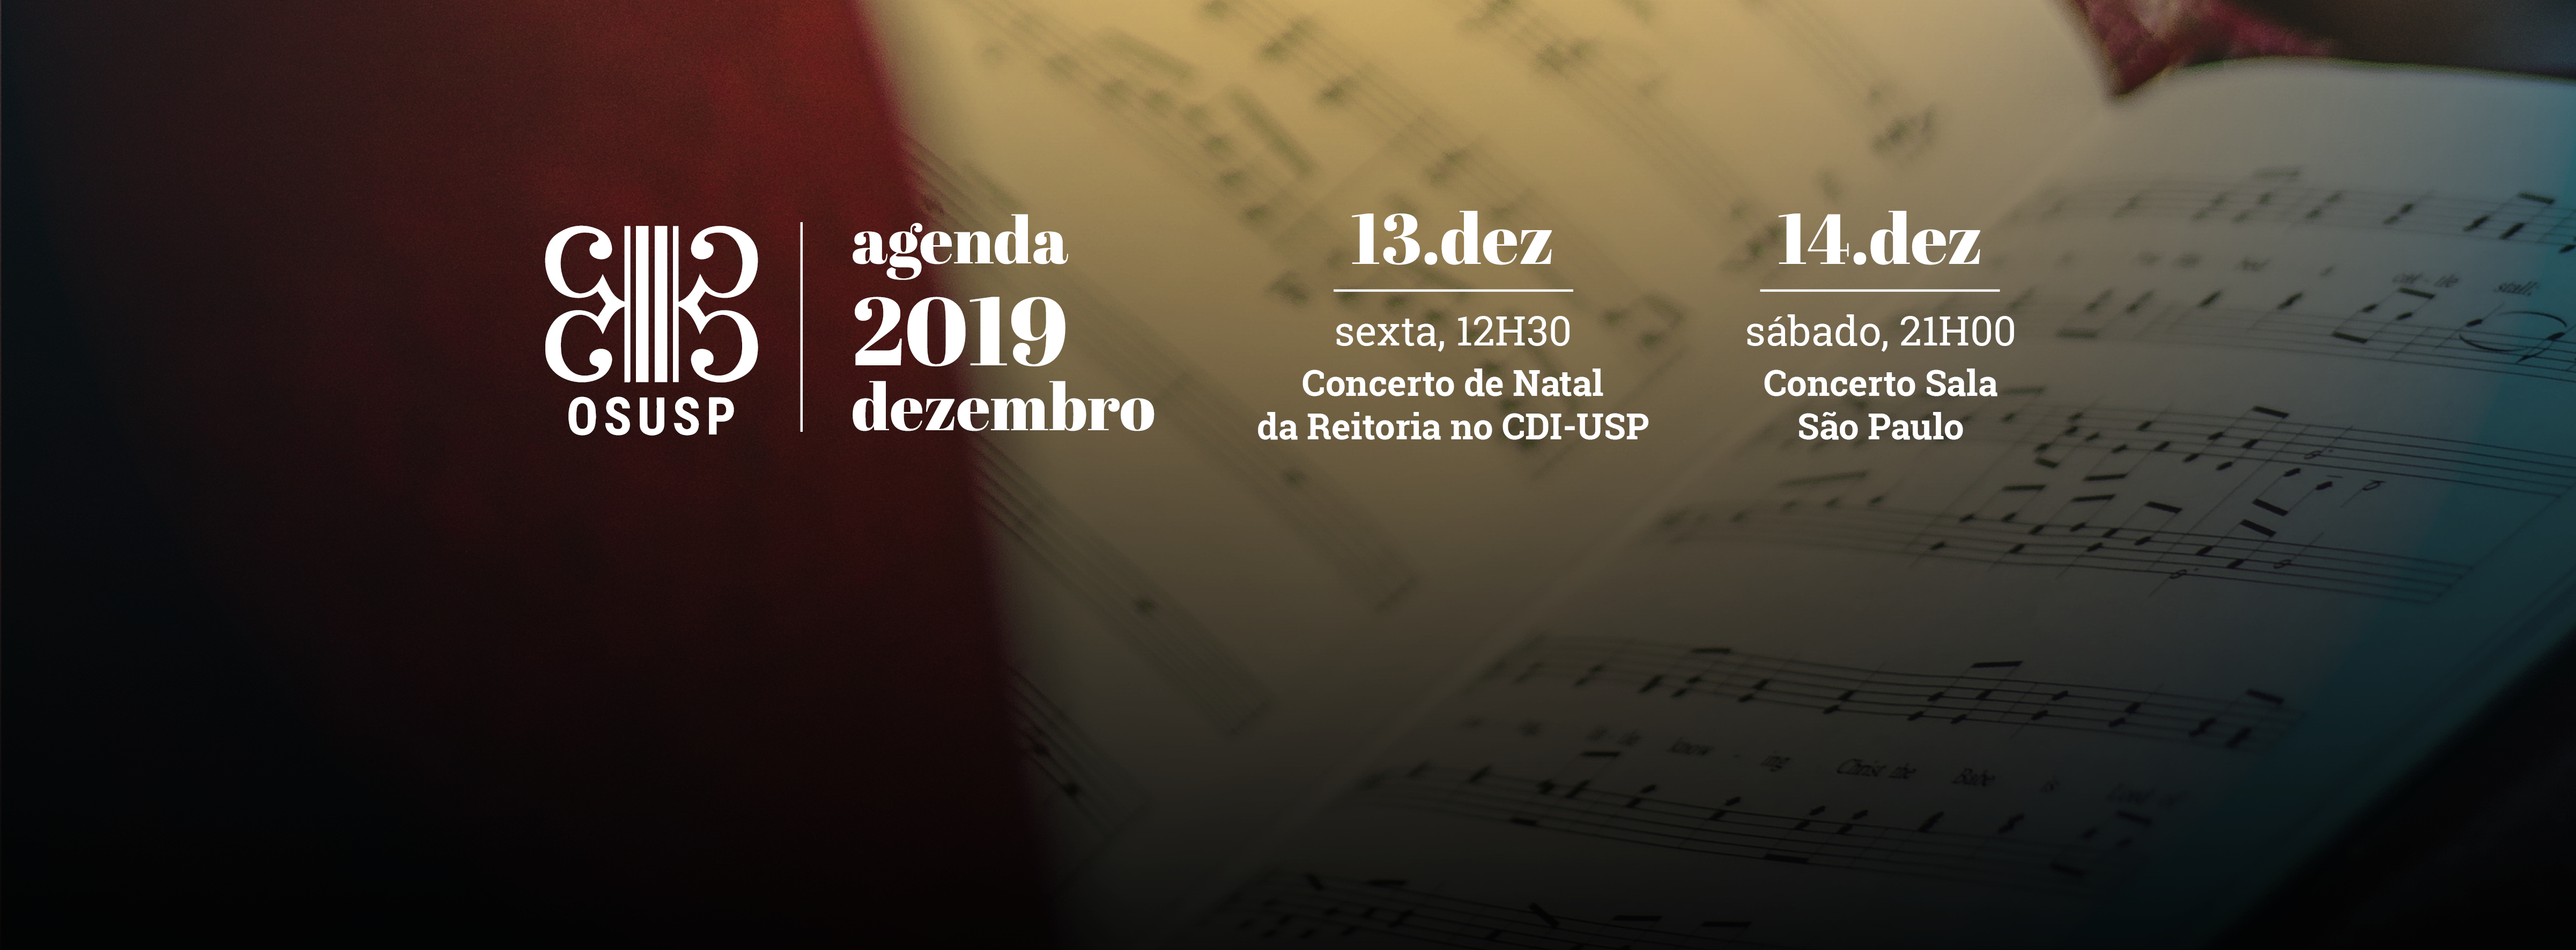 (Português) OSUSP realiza concerto na Sala São Paulo